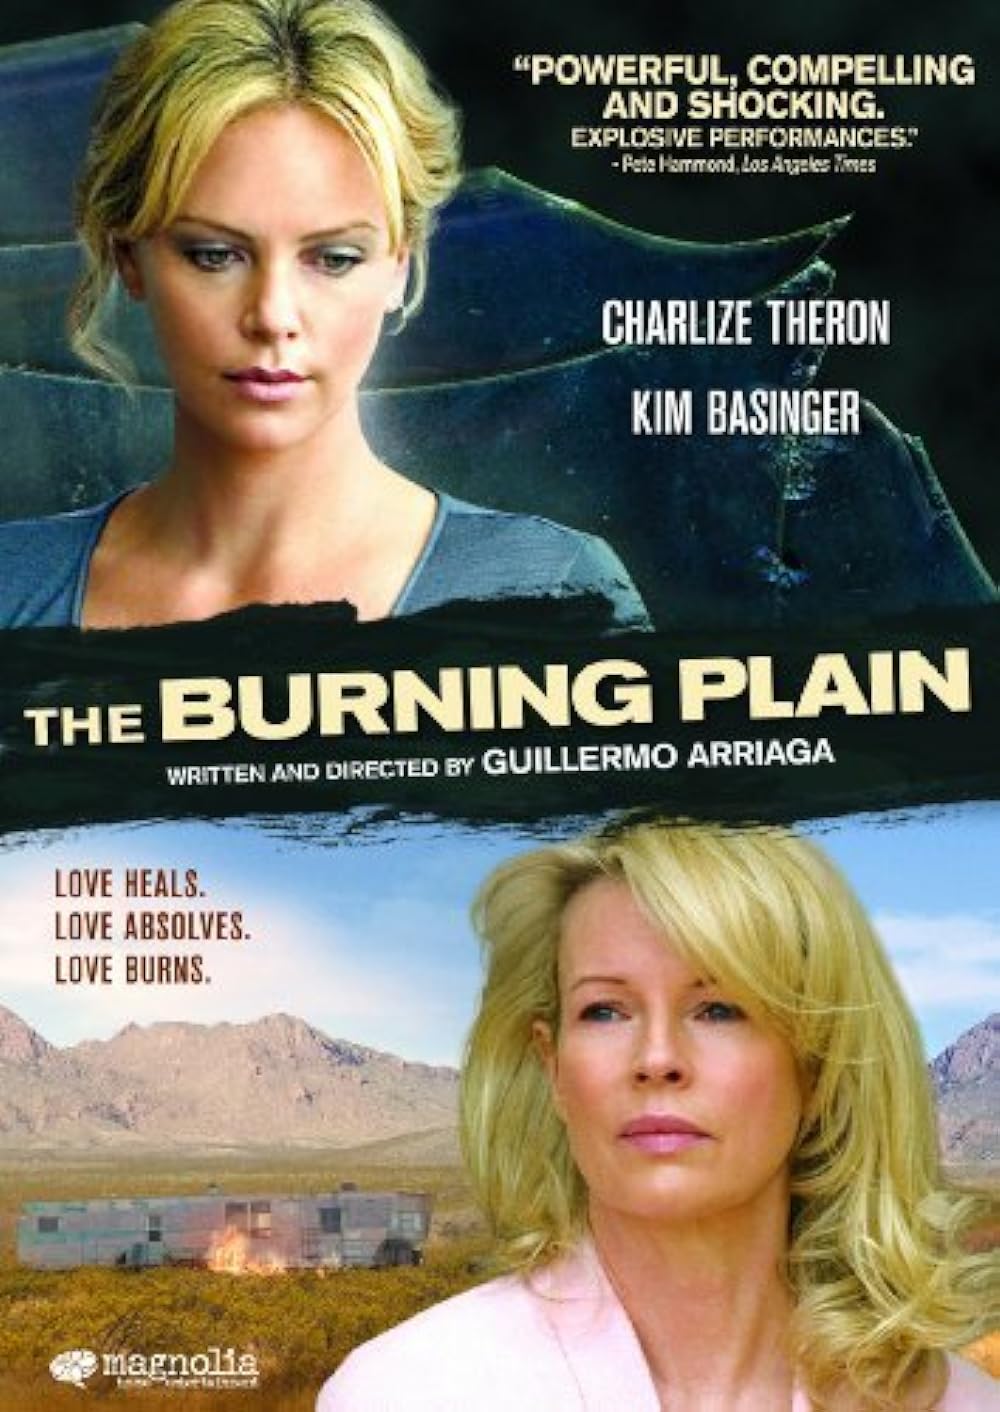 The Burning Plain (2008) 3249Kbps 24Fps 48Khz BluRay DTS-HD MA 5.1Ch Turkish Audio TAC